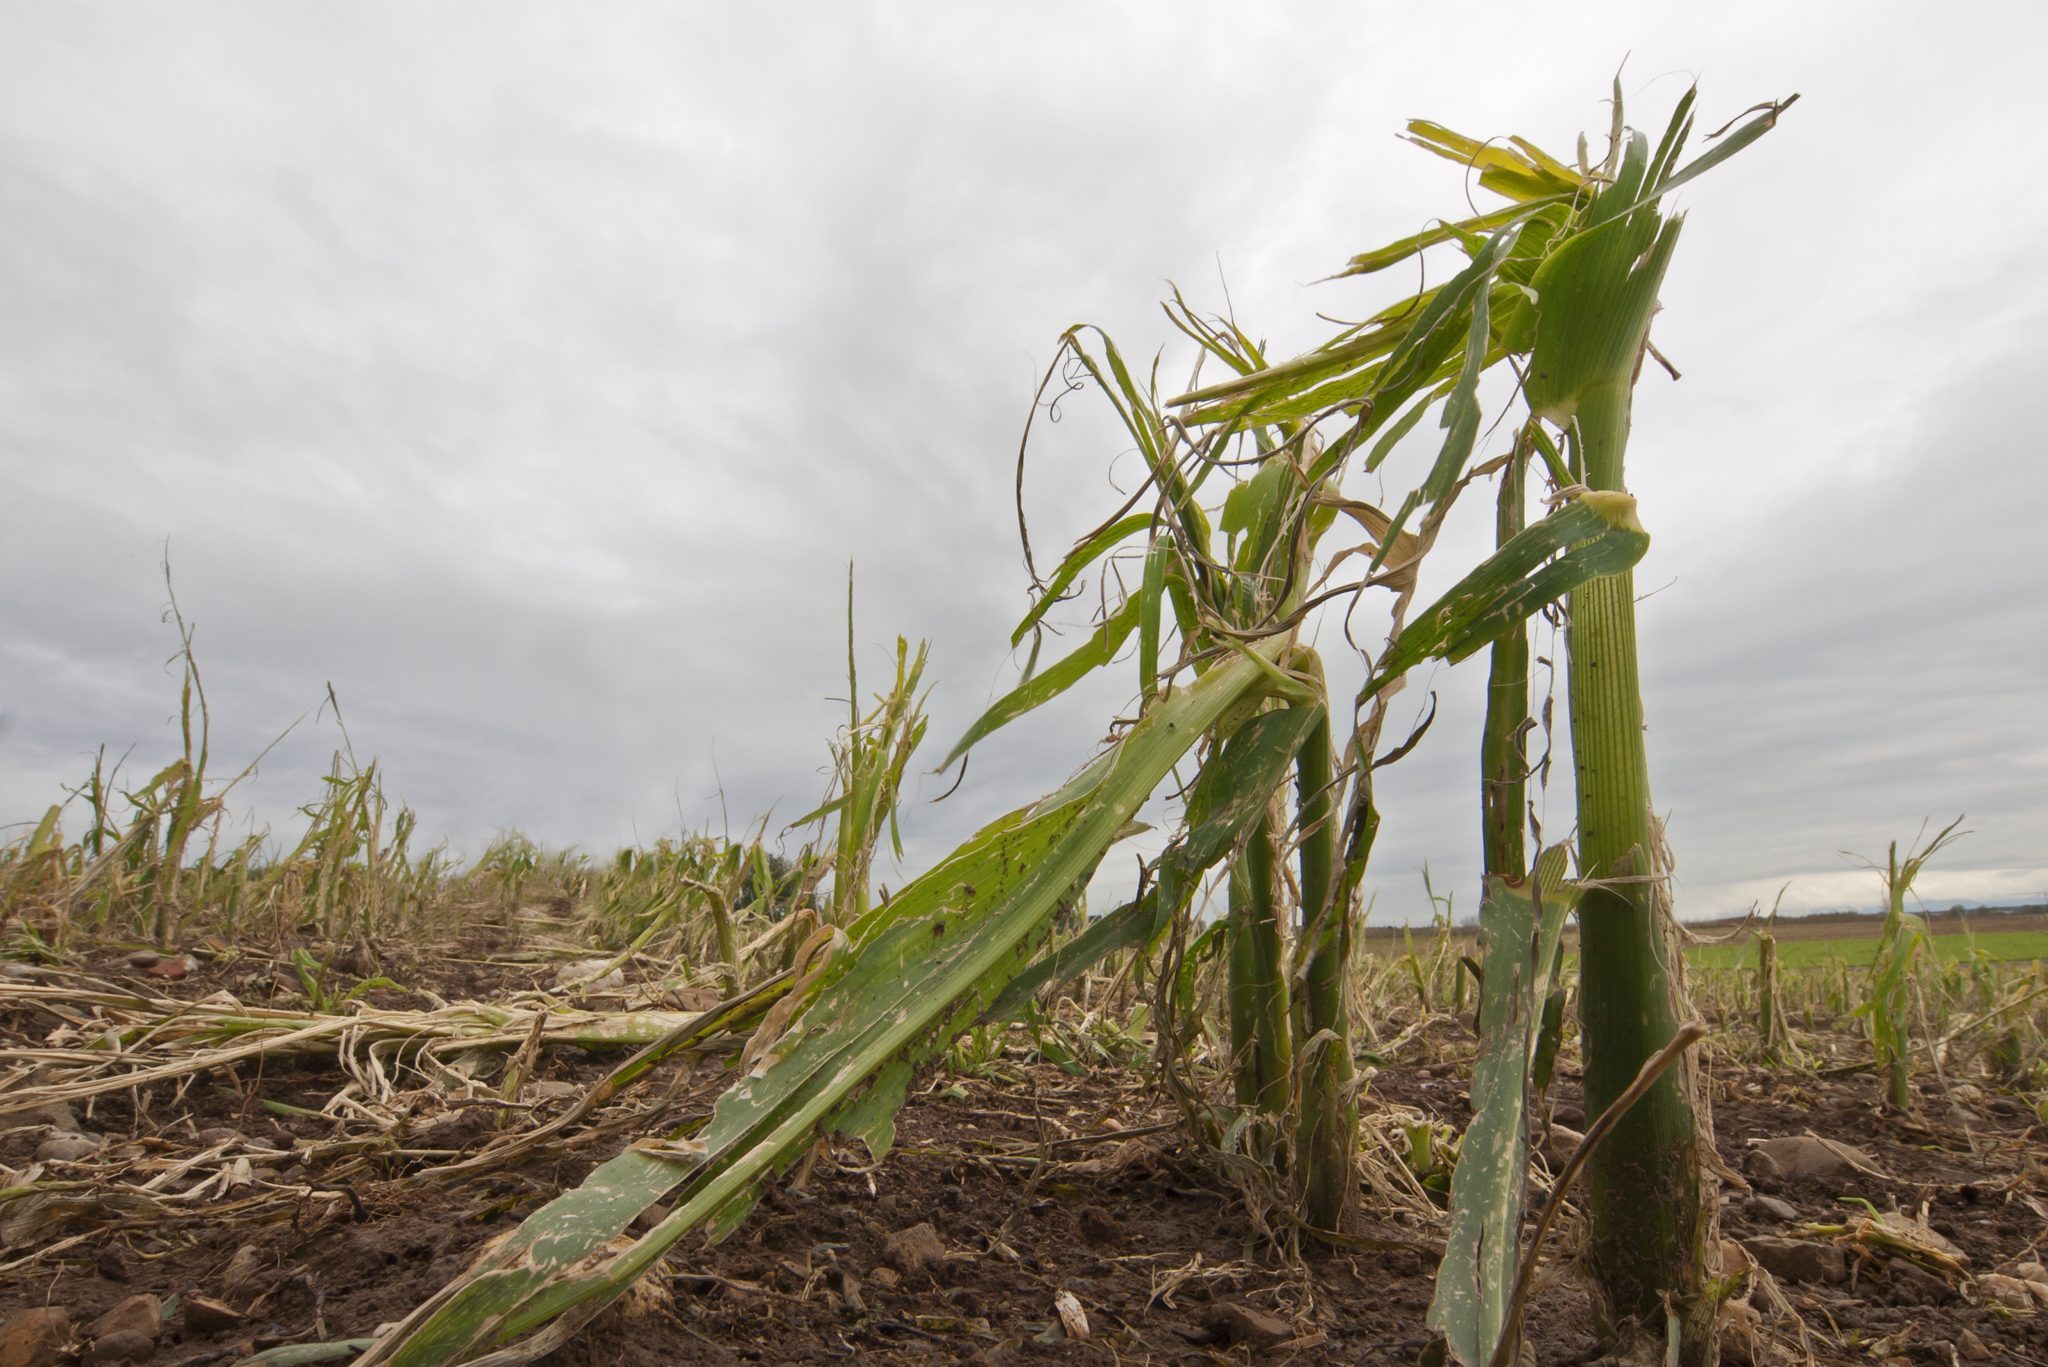 Damaged corn crops in the field